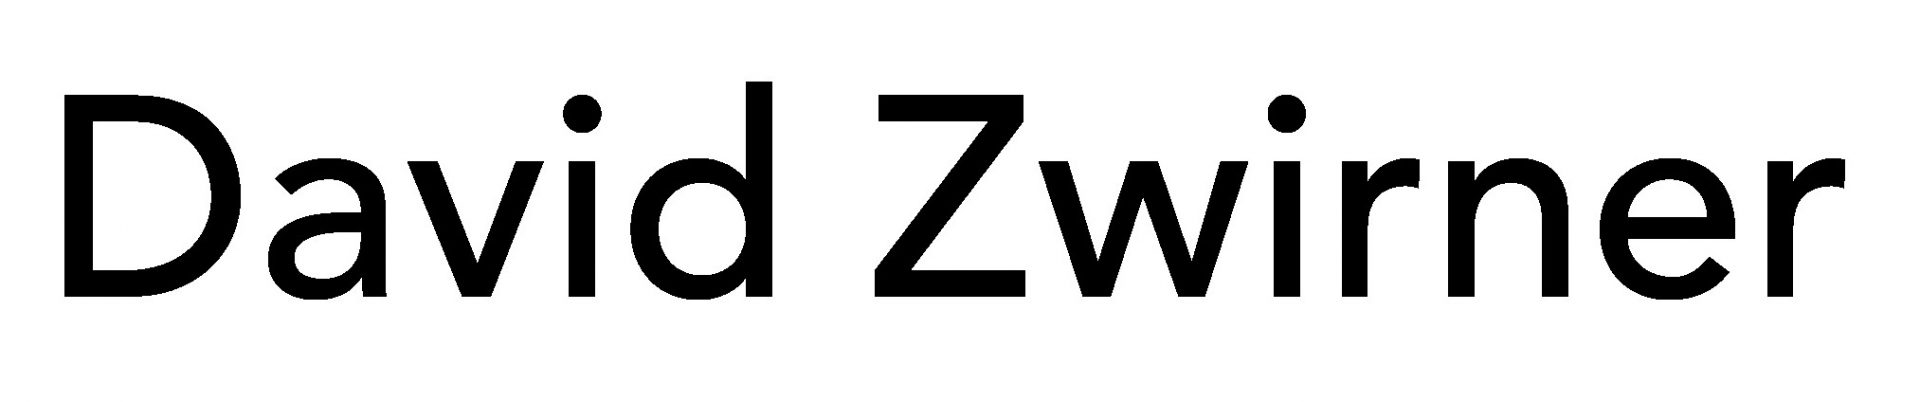 David-Zwirner-logo-1